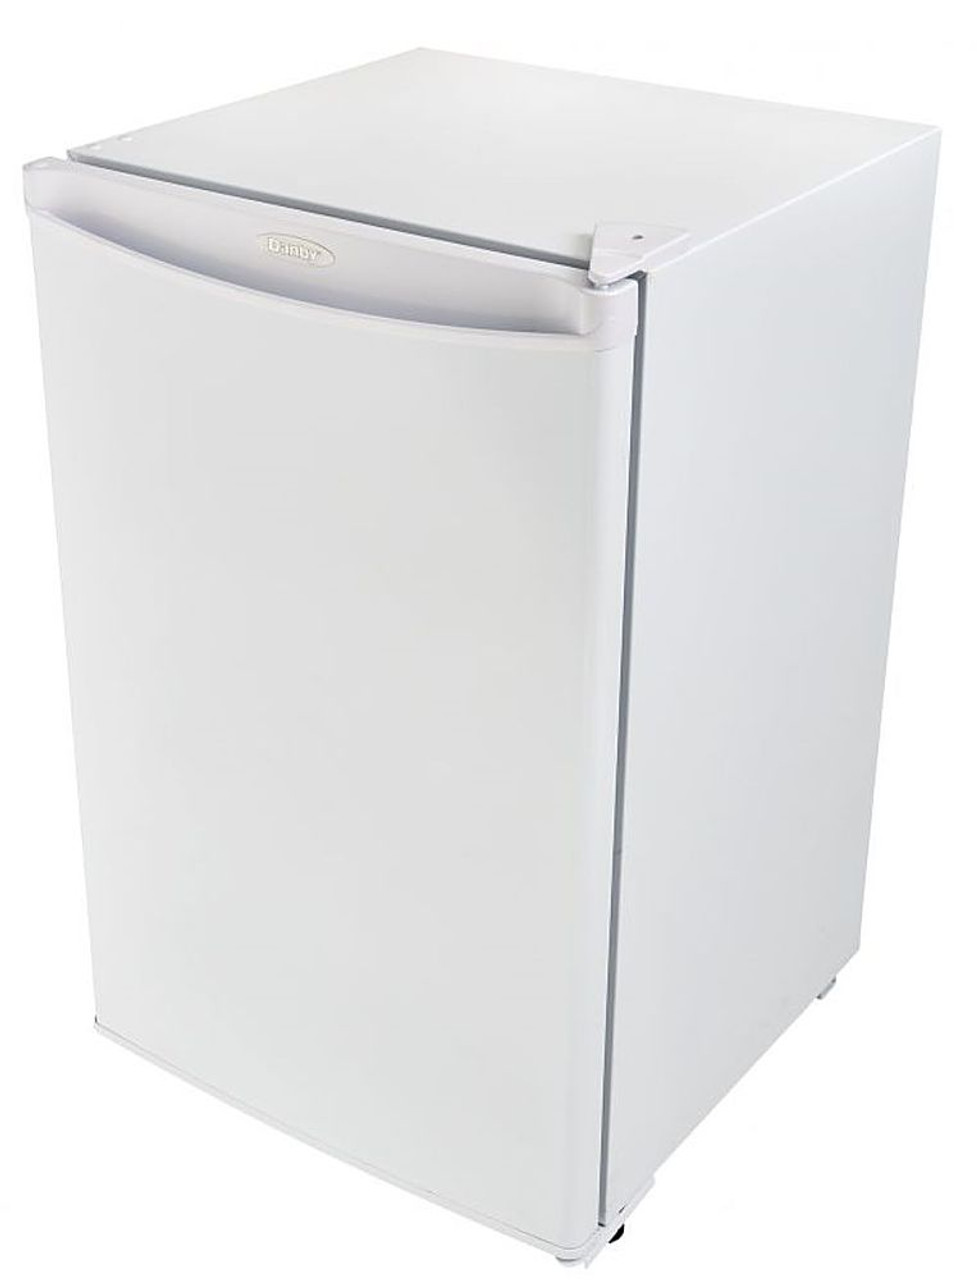 Danby - 3.2 cu. Ft. Upright Freezer - White